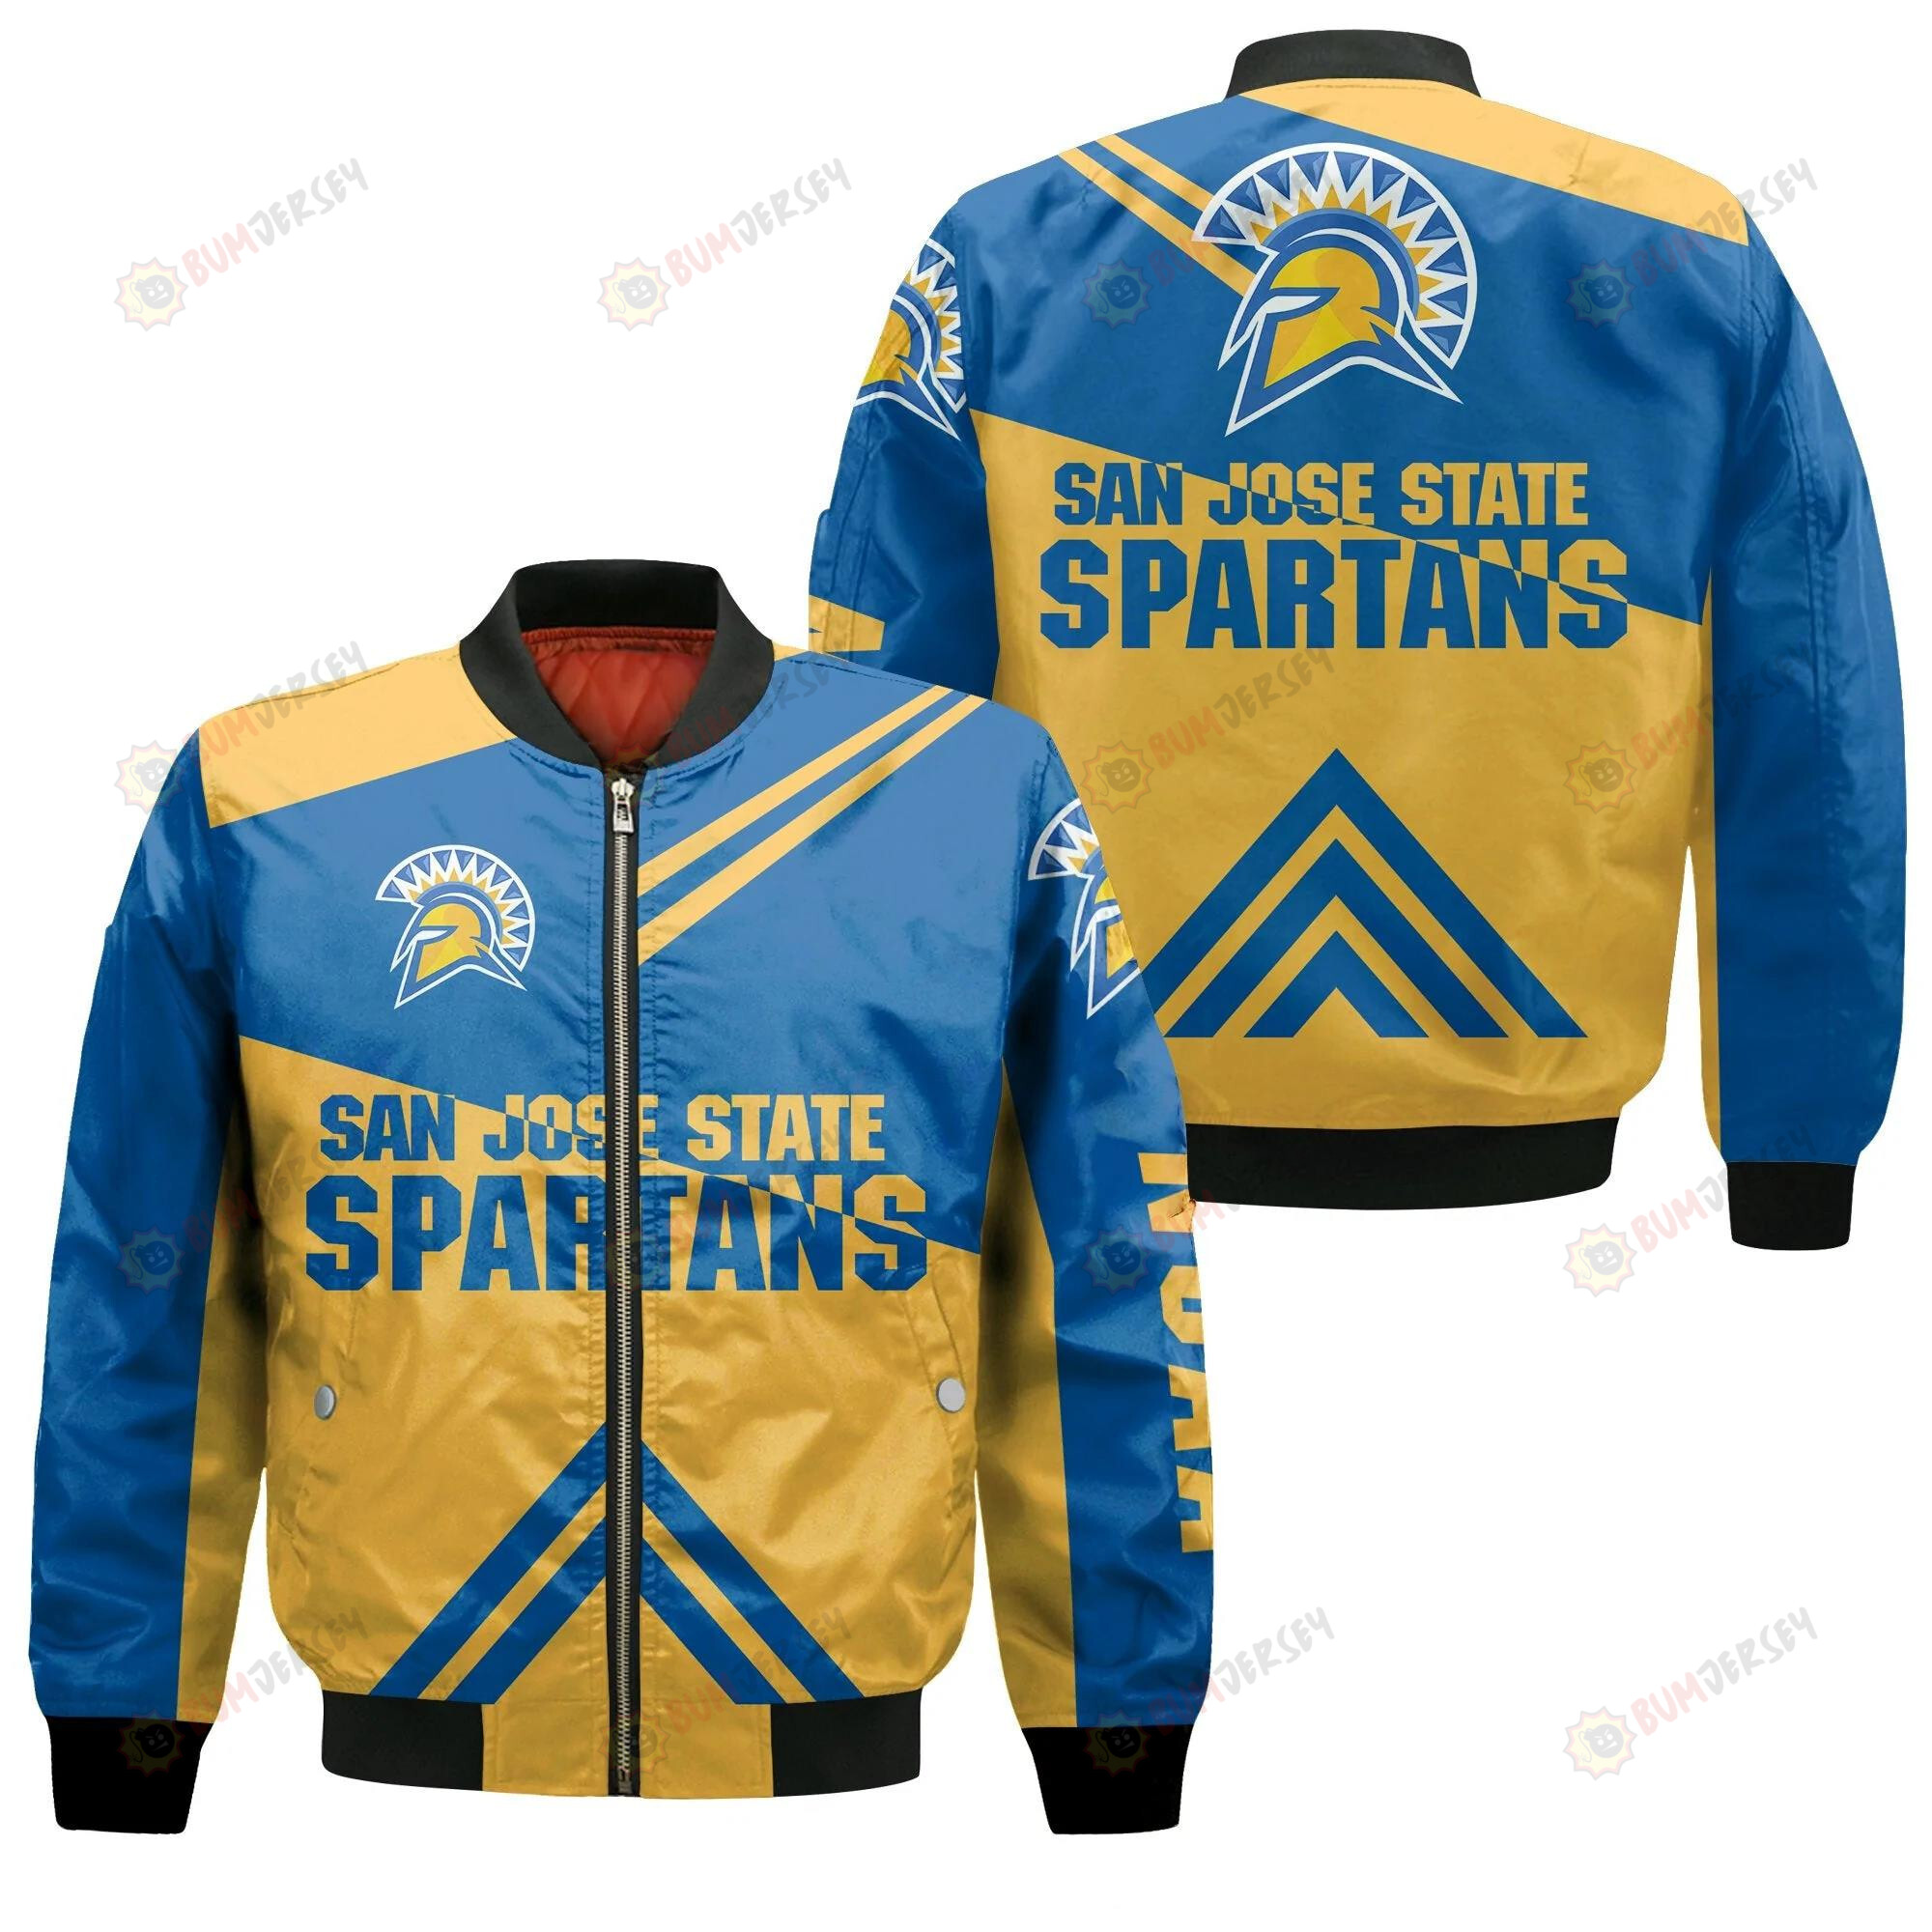 San Jose State Spartans Football Bomber Jacket 3D Printed - Stripes Cross Shoulders